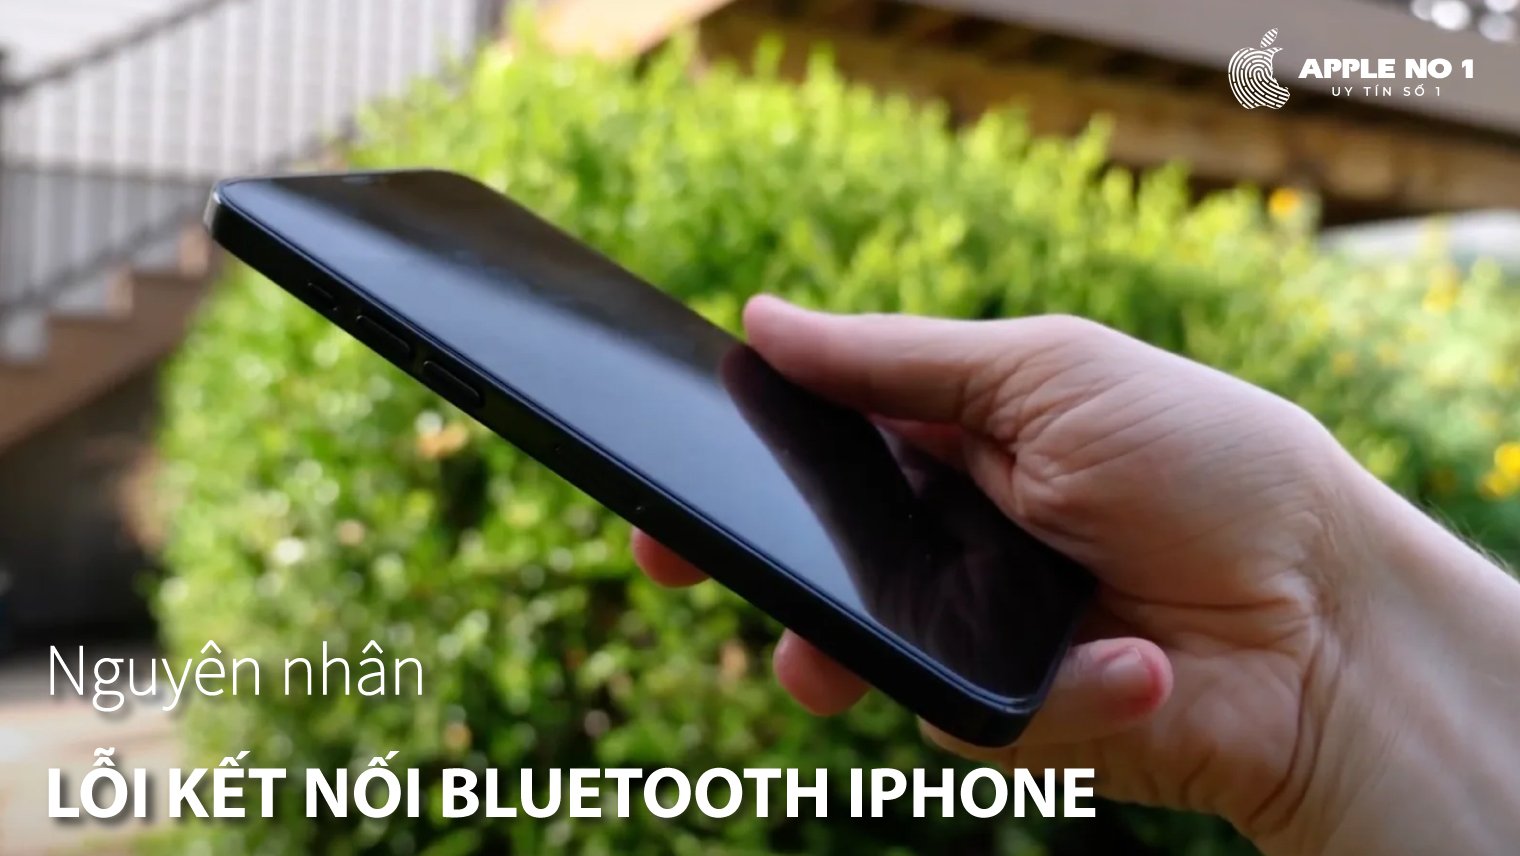 nguyen nhan iphone khong bat duoc bluetooth